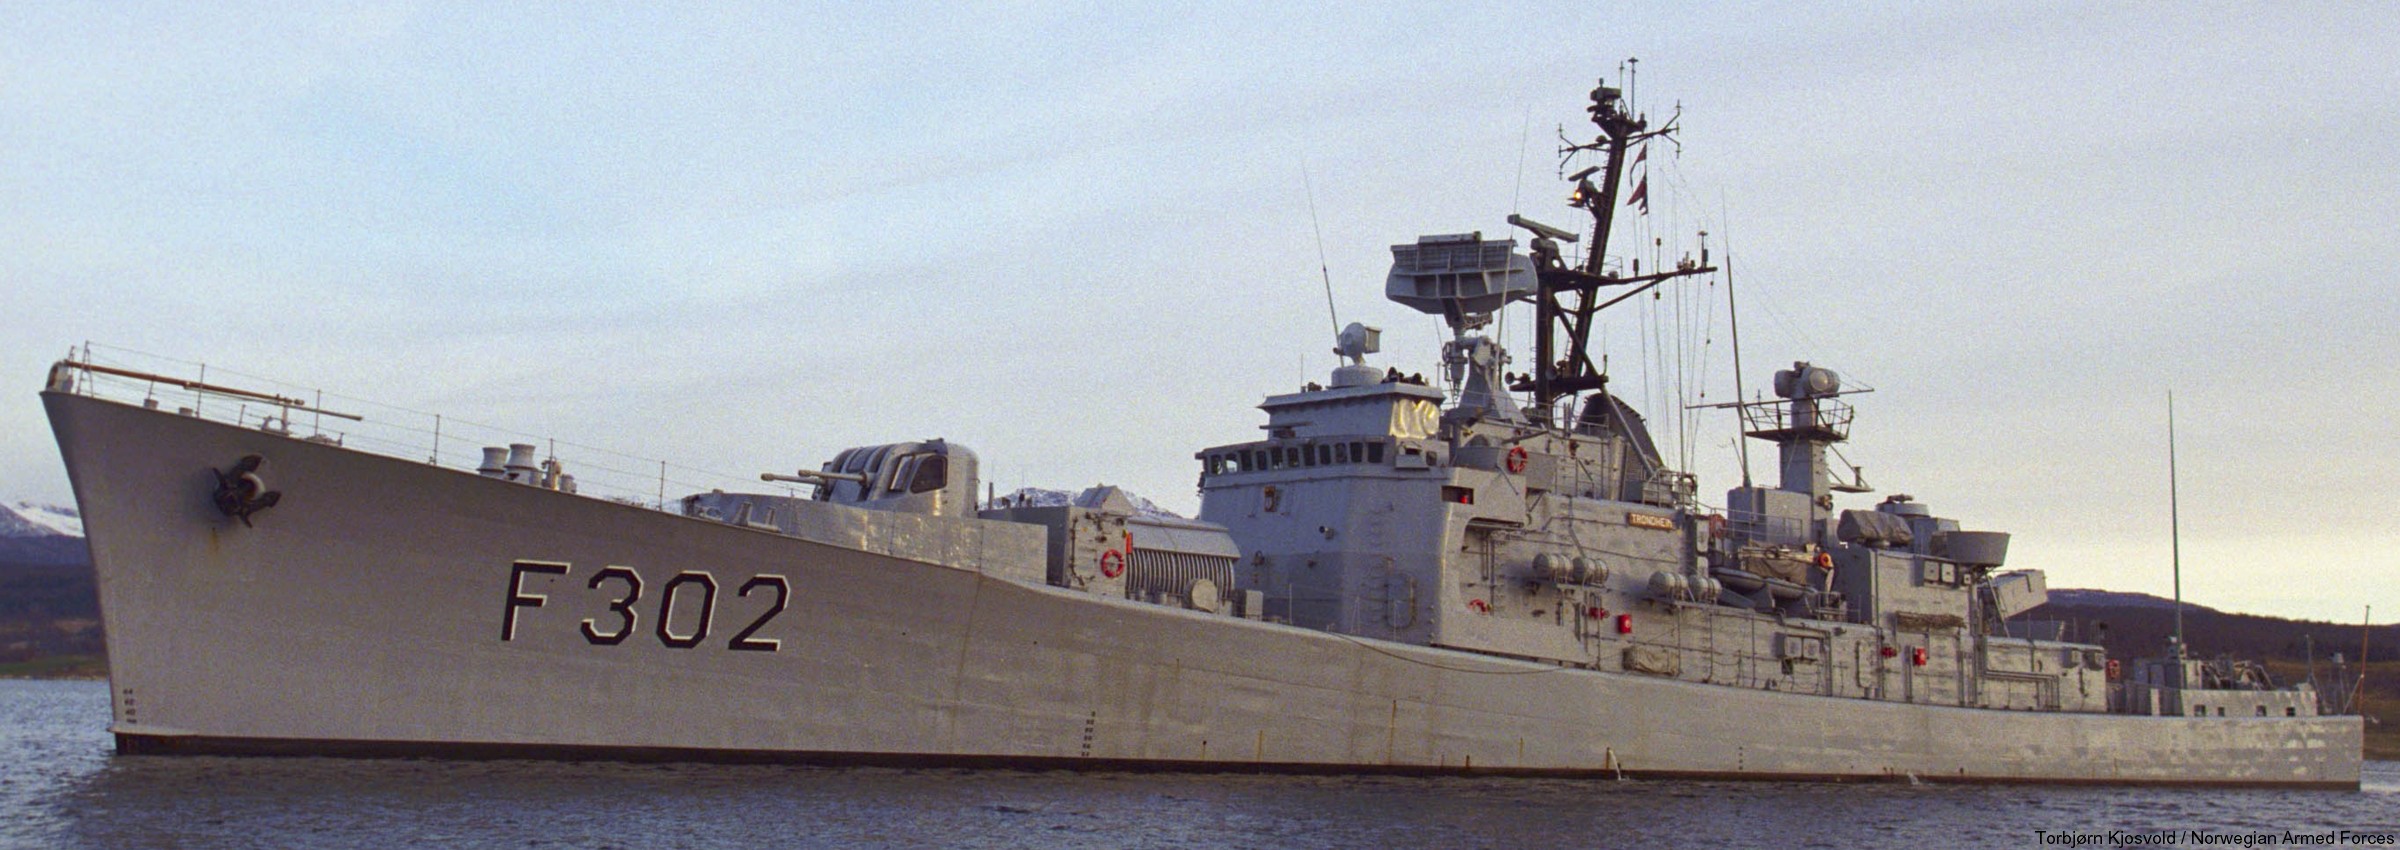 f-302 hnoms trondheim knm oslo class frigate royal norwegian navy sjoforsvaret 06